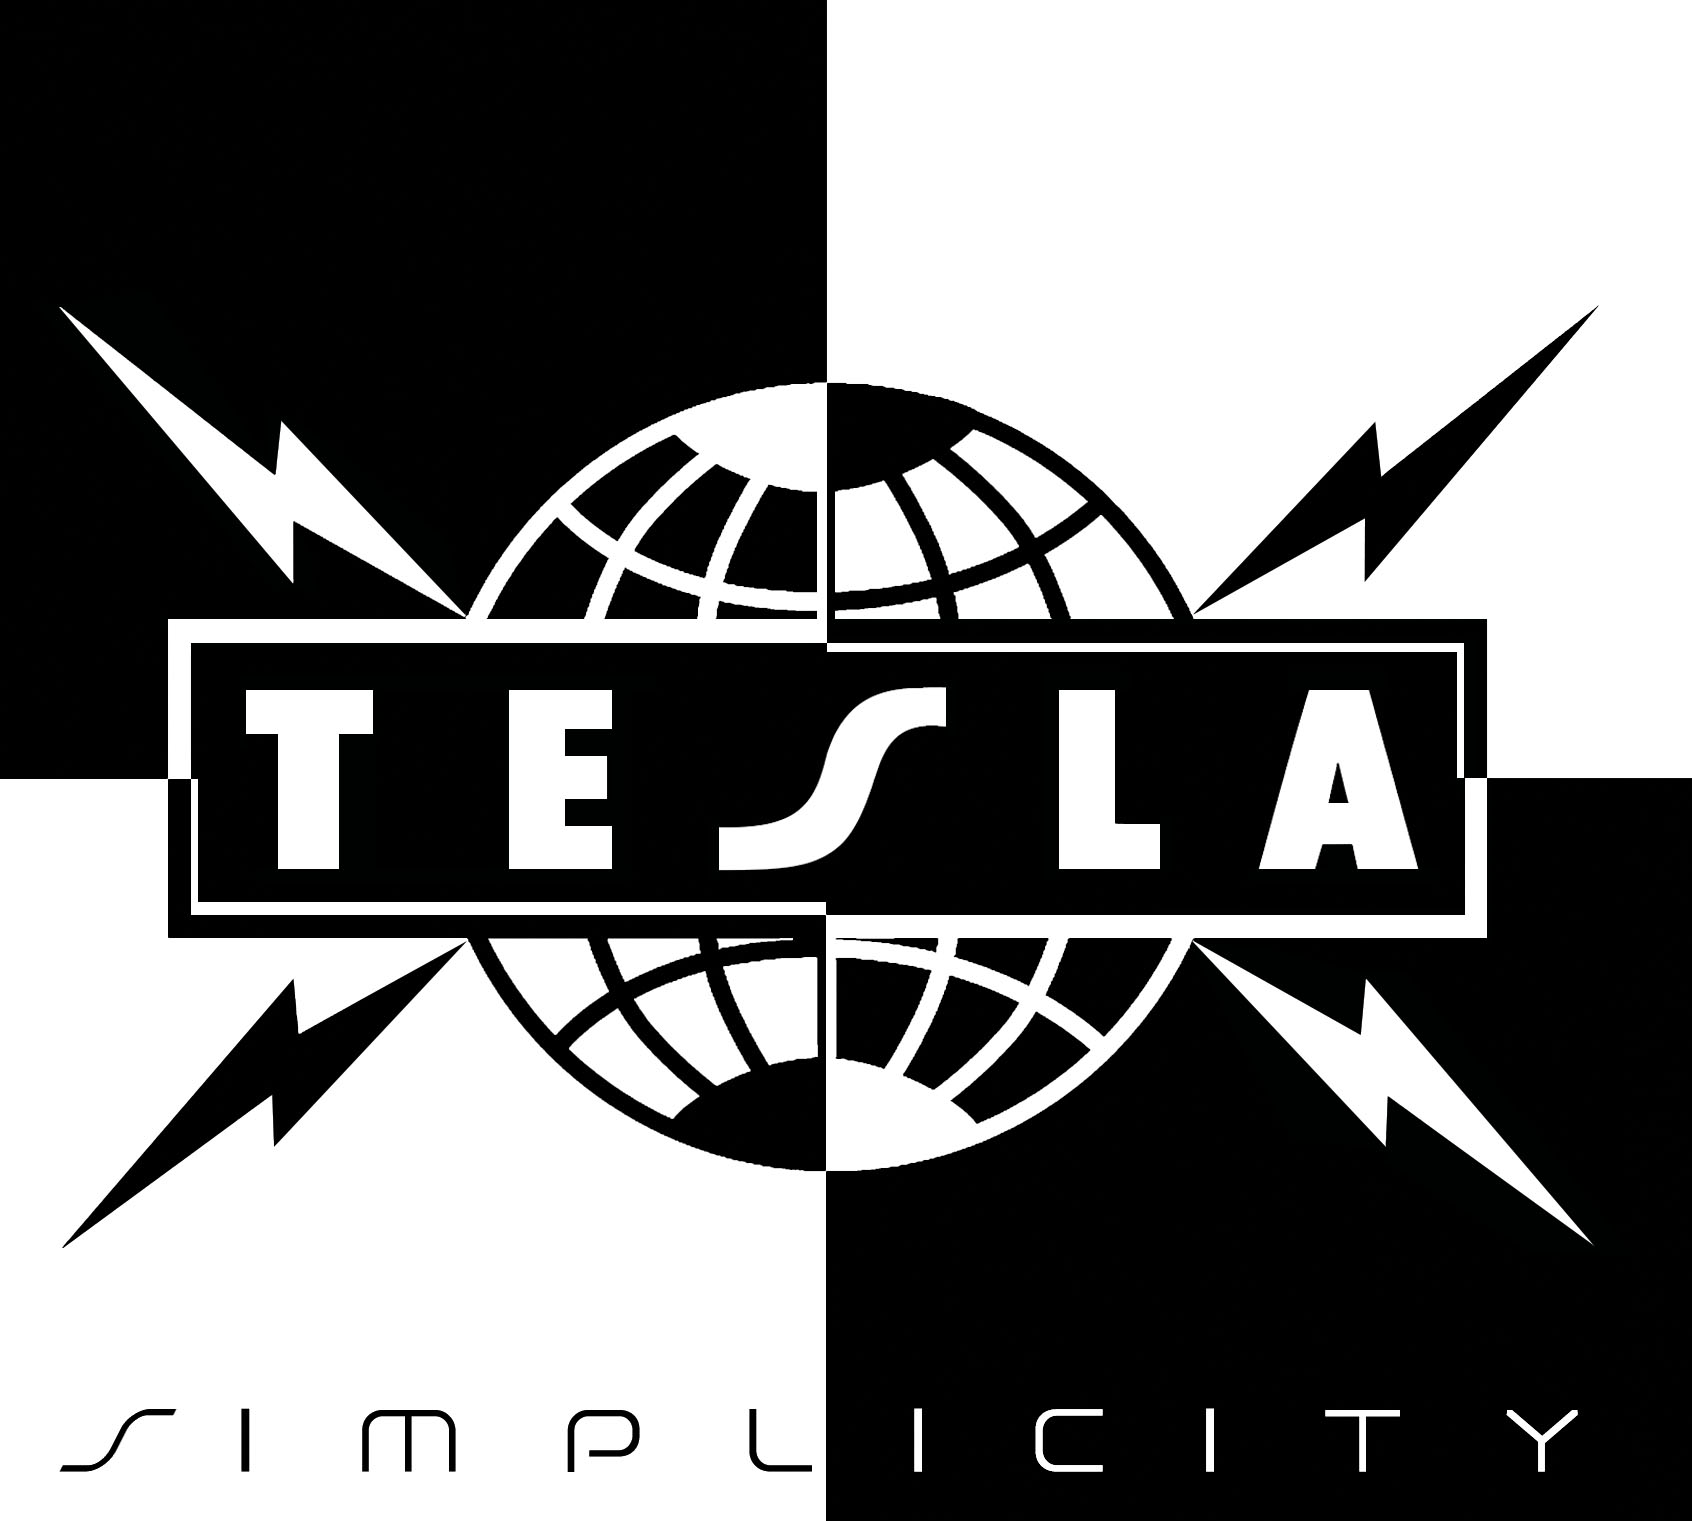 TESLA - Simplicity